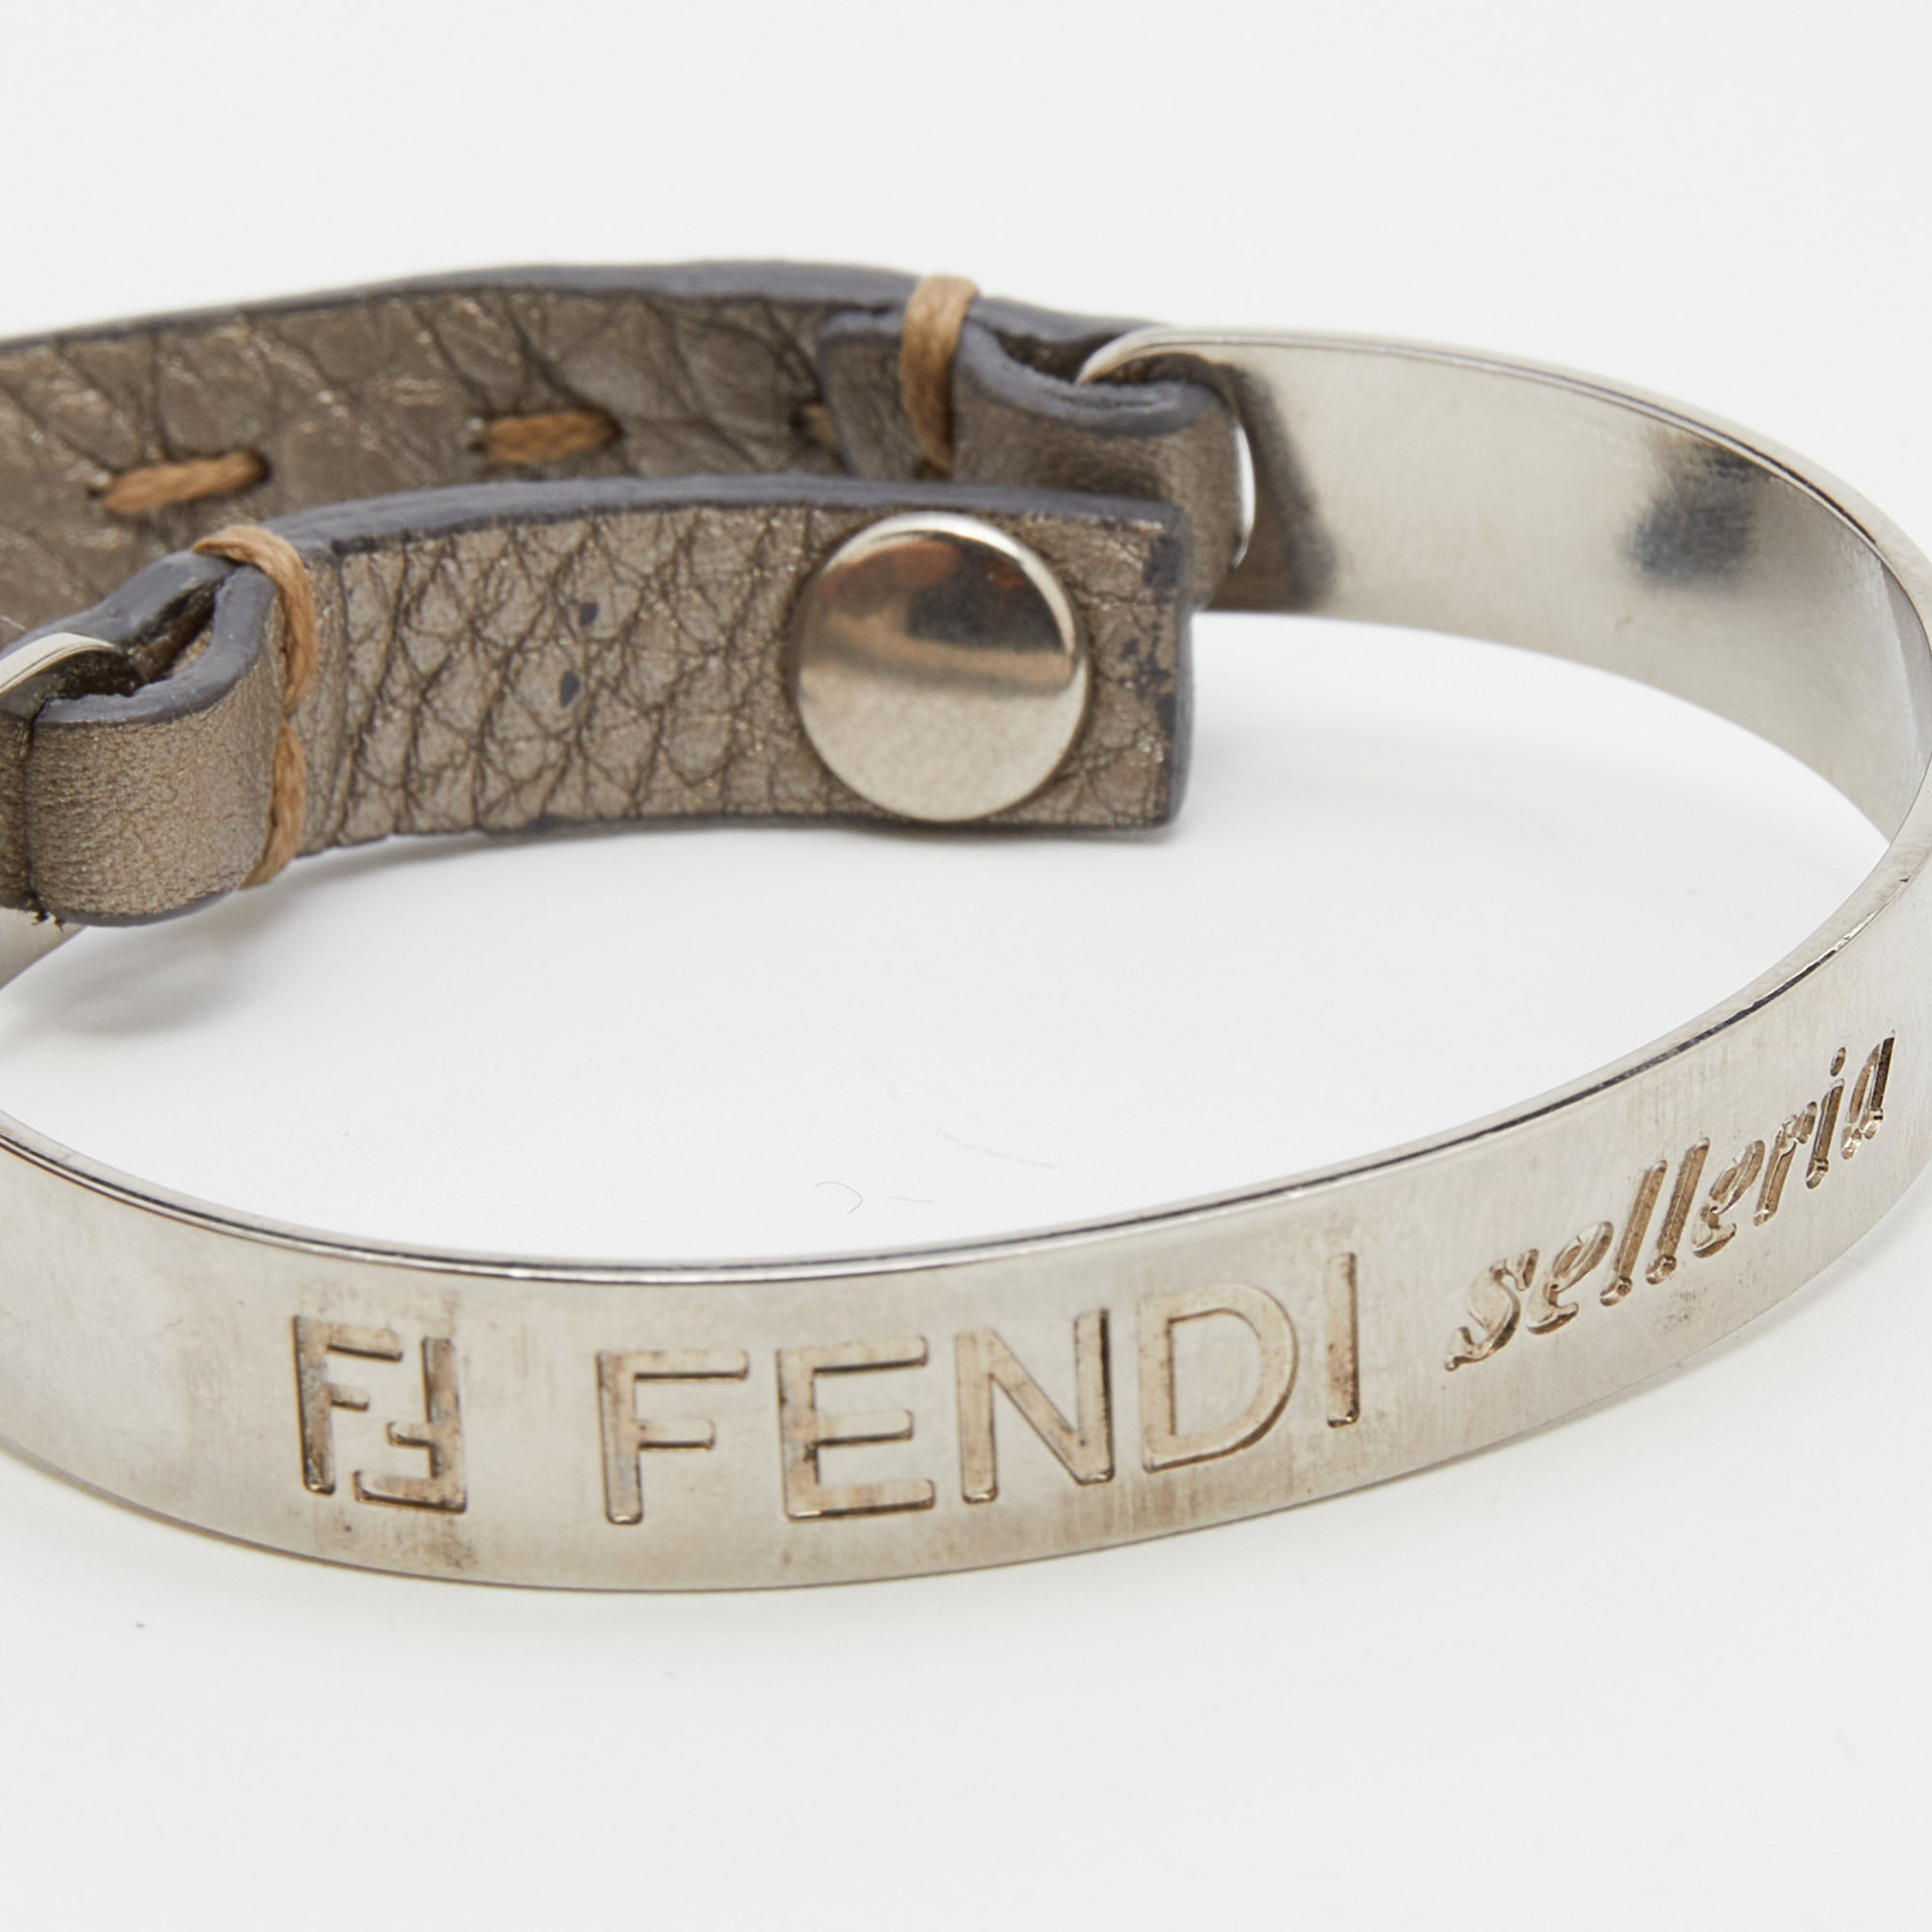 

Fendi Selleria Silver Tone Cuff & Metallic Leather Double Wrap Bracelet, Grey